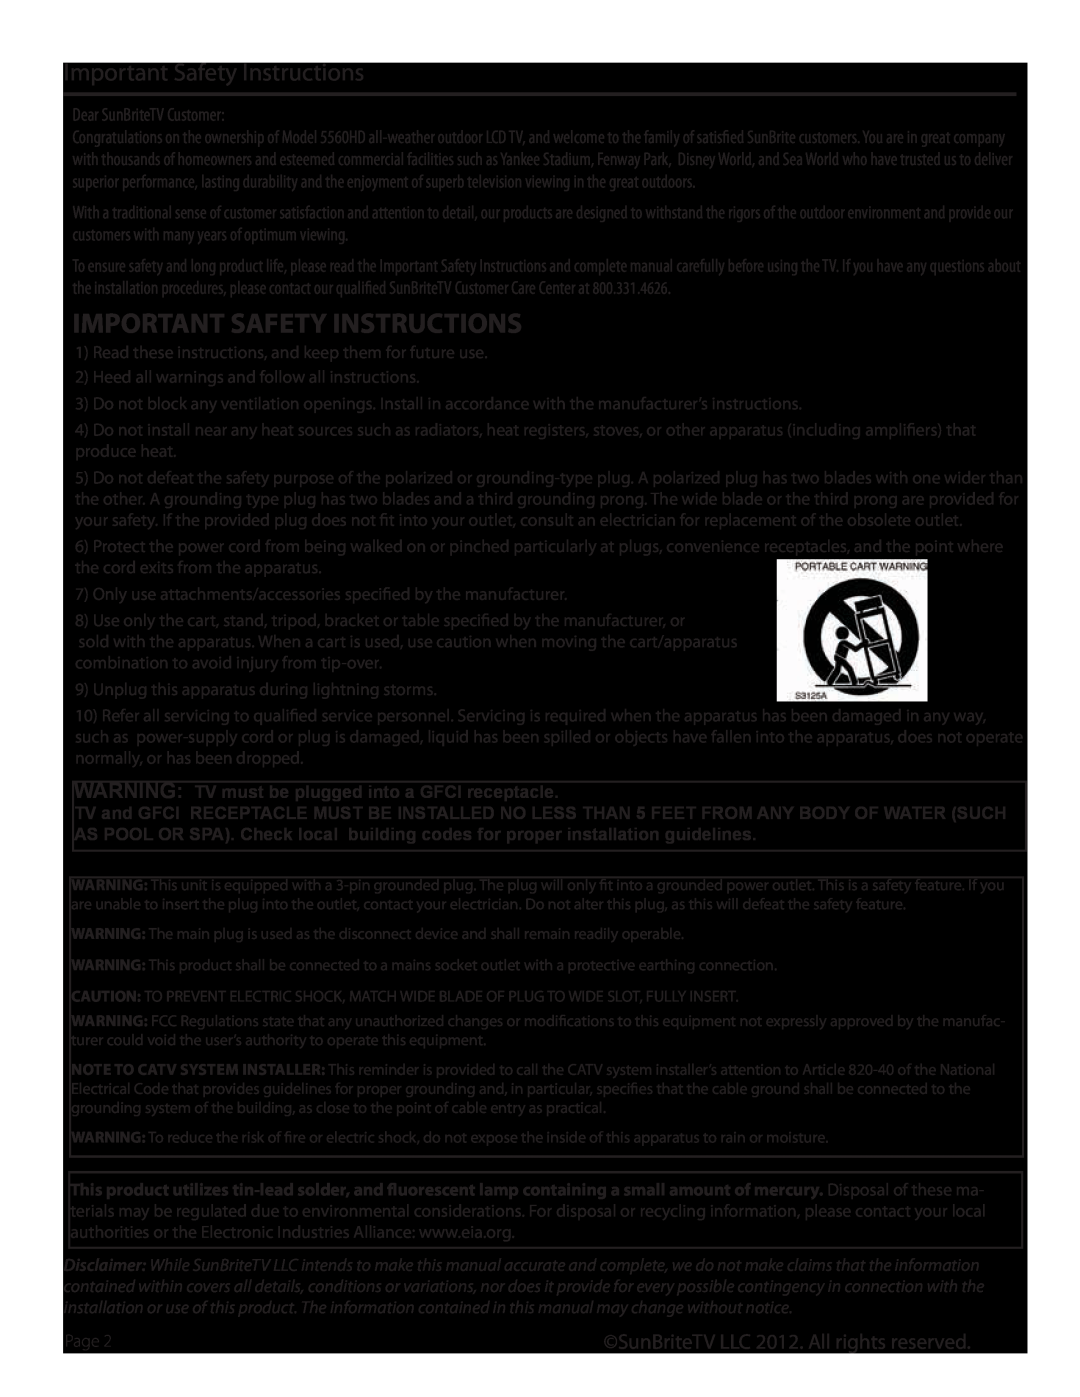 SunBriteTV SB-5560HD-BL Important Safety Instructions, Dear SunBriteTV Customer, SunBriteTV LLC 2012. All rights reserved 